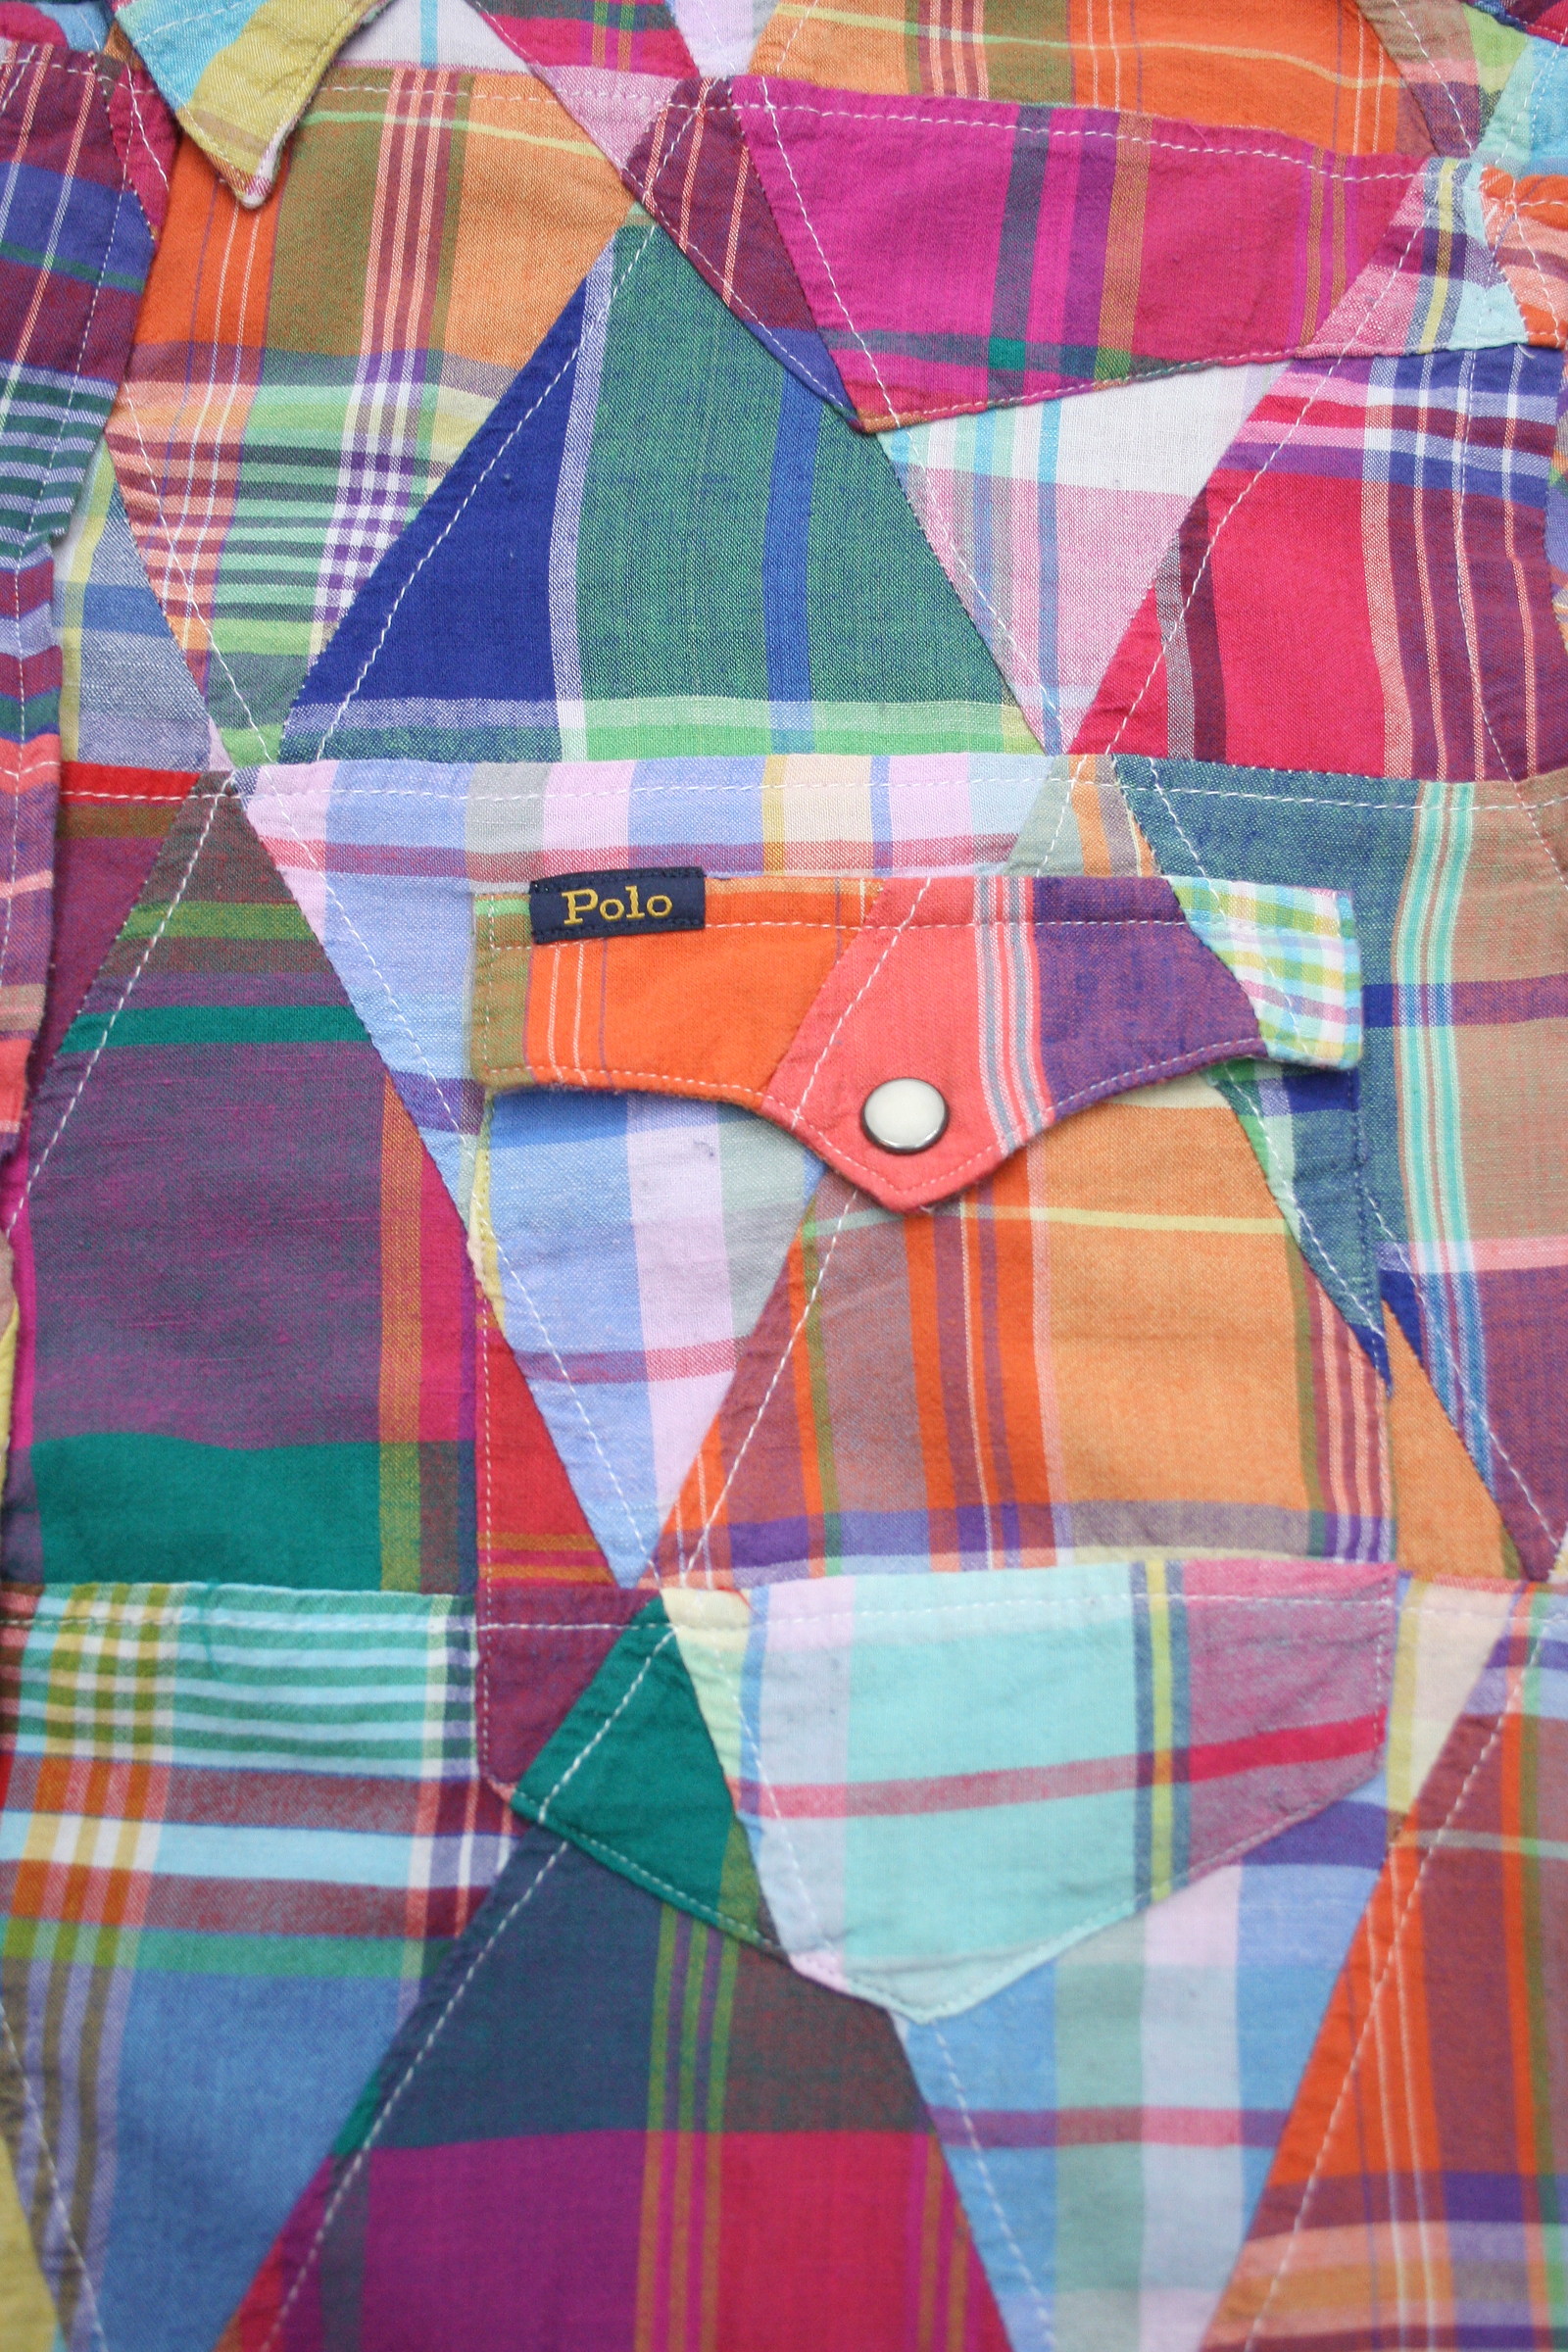 Ralph Lauren Polo Ralph Lauren Men's Madras Patchwork Plaid Classic Fit Button Up Shirt $198